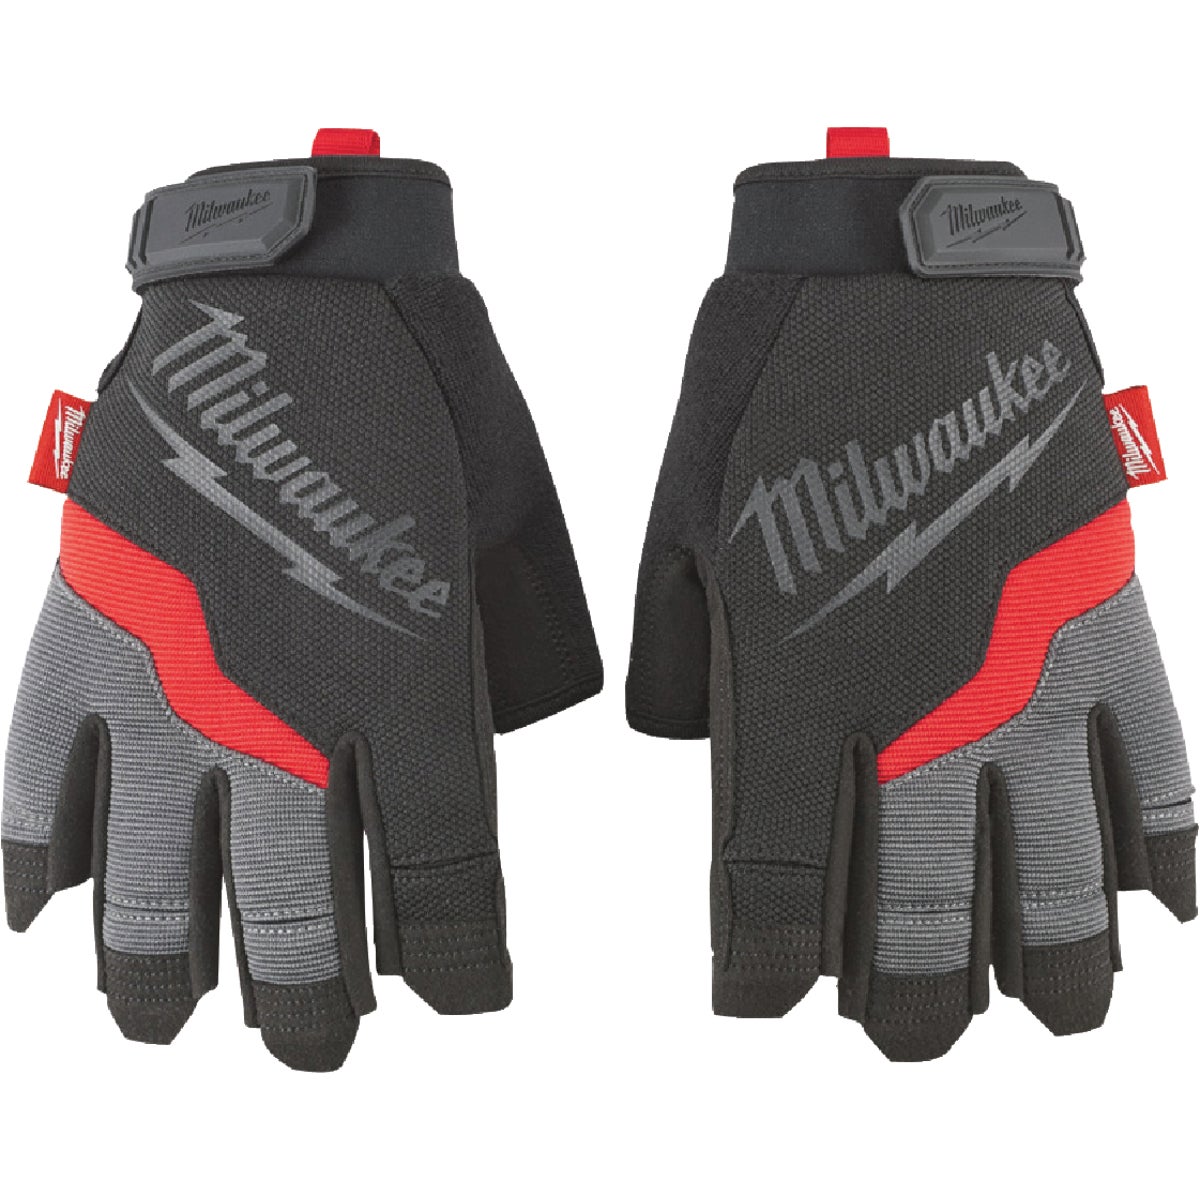 Item 705367, Performance fingerless work gloves designed to provide ultimate durability 